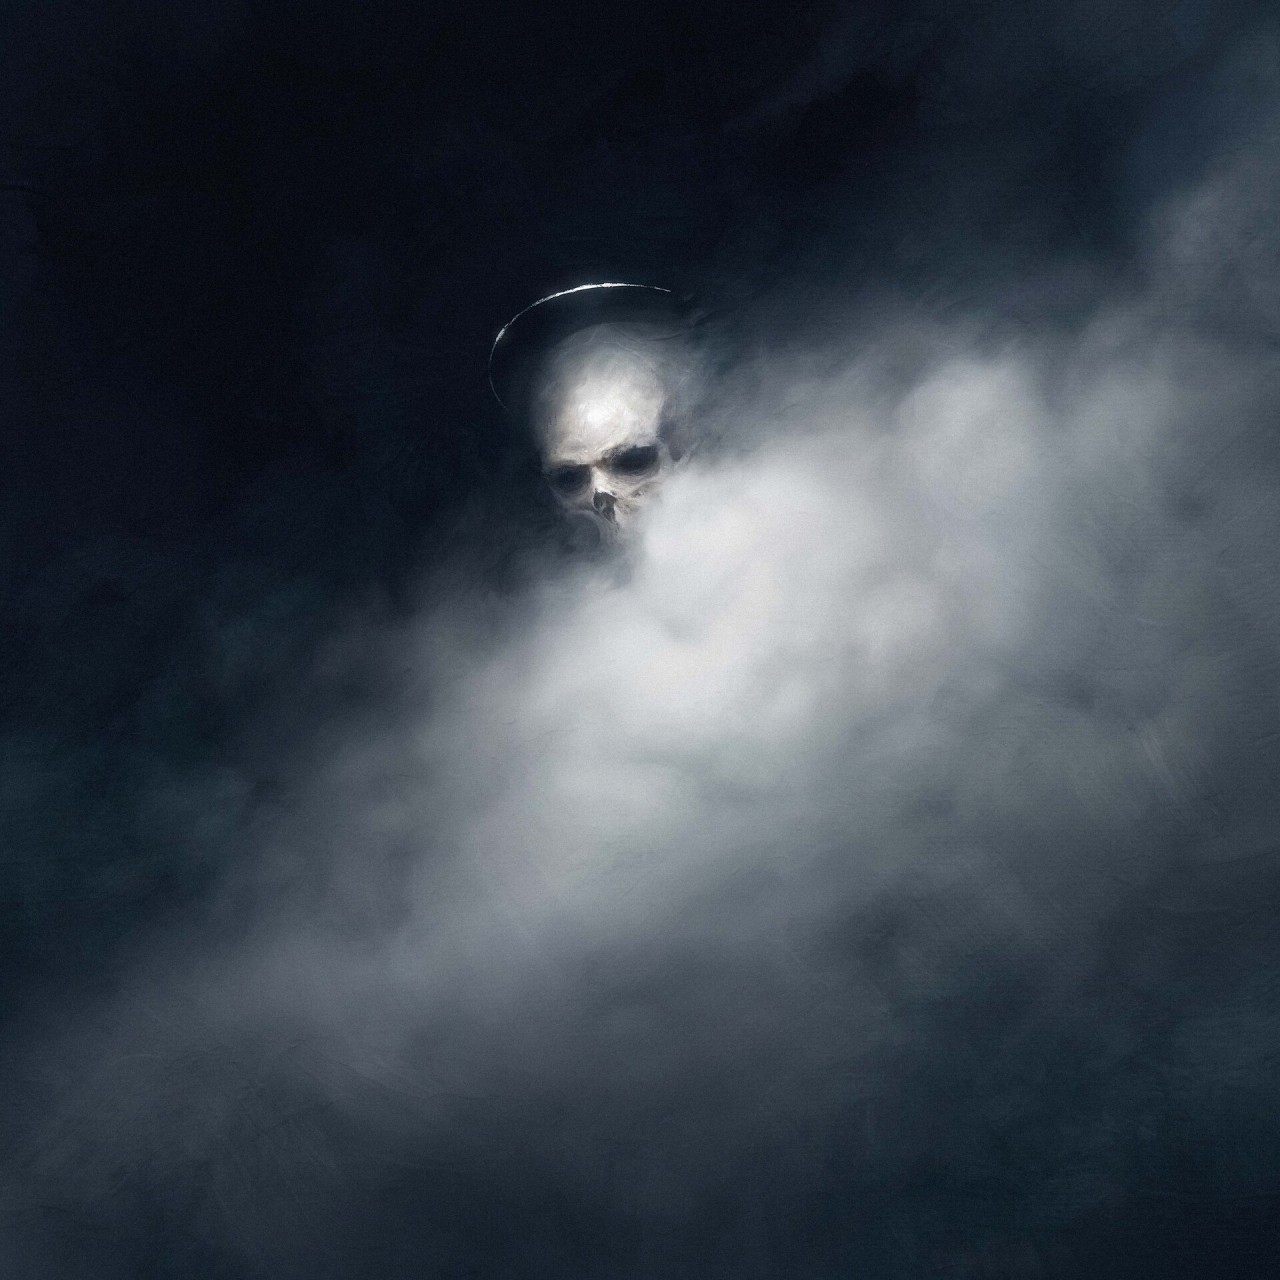 Spectral Winds by Maéna Paillet #art#illustration#digital art#dark art#fantasy#surreal#skull#death#spirit#ghost